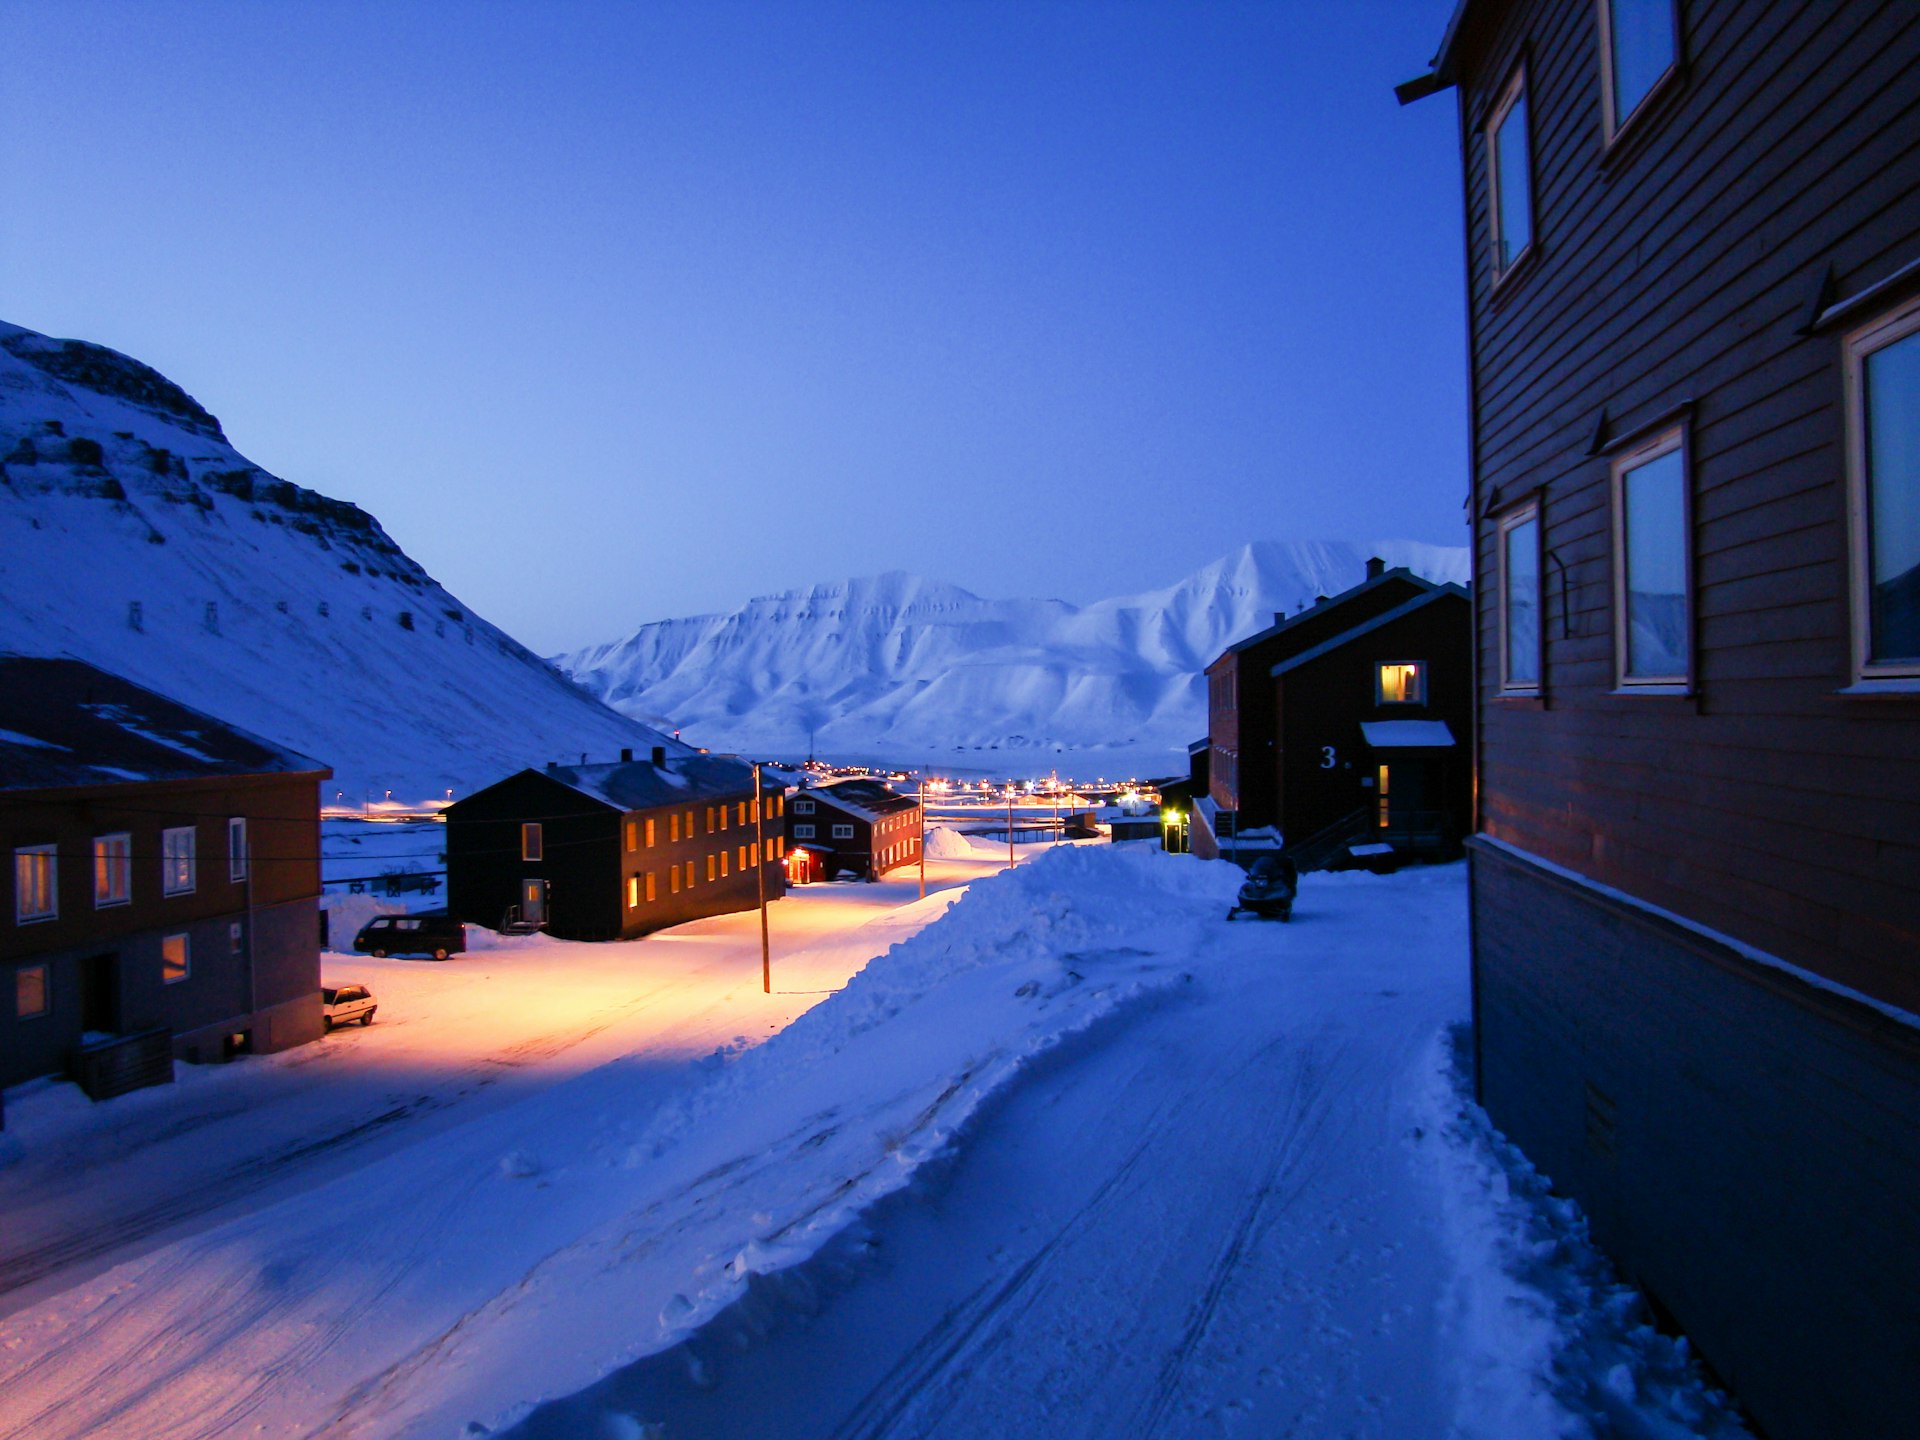 Dusk in the town of Longyearbyen, Svalbard, Norway